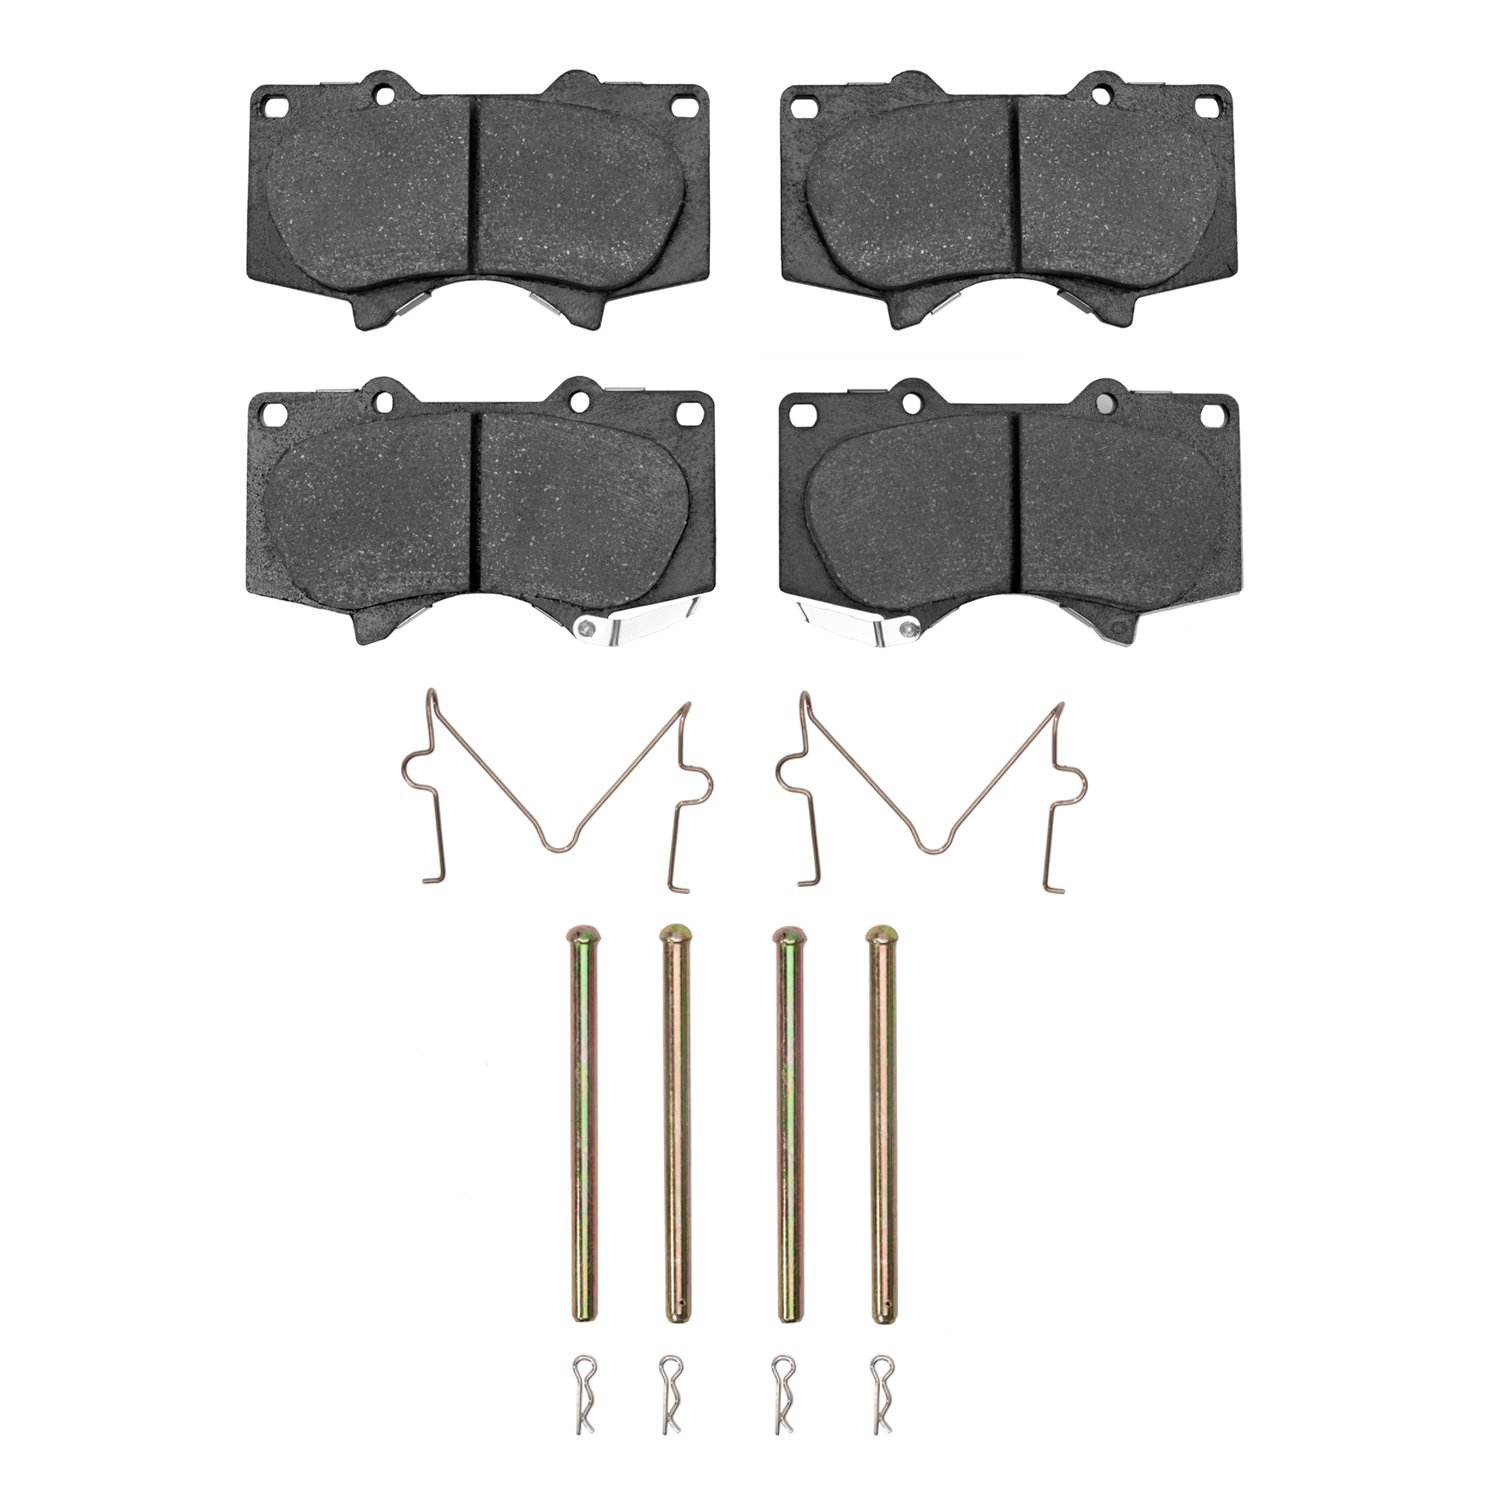 1310-0976-01 3000-Series Ceramic Brake Pads & Hardware Kit, Fits Select Multiple Makes/Models, Position: Front